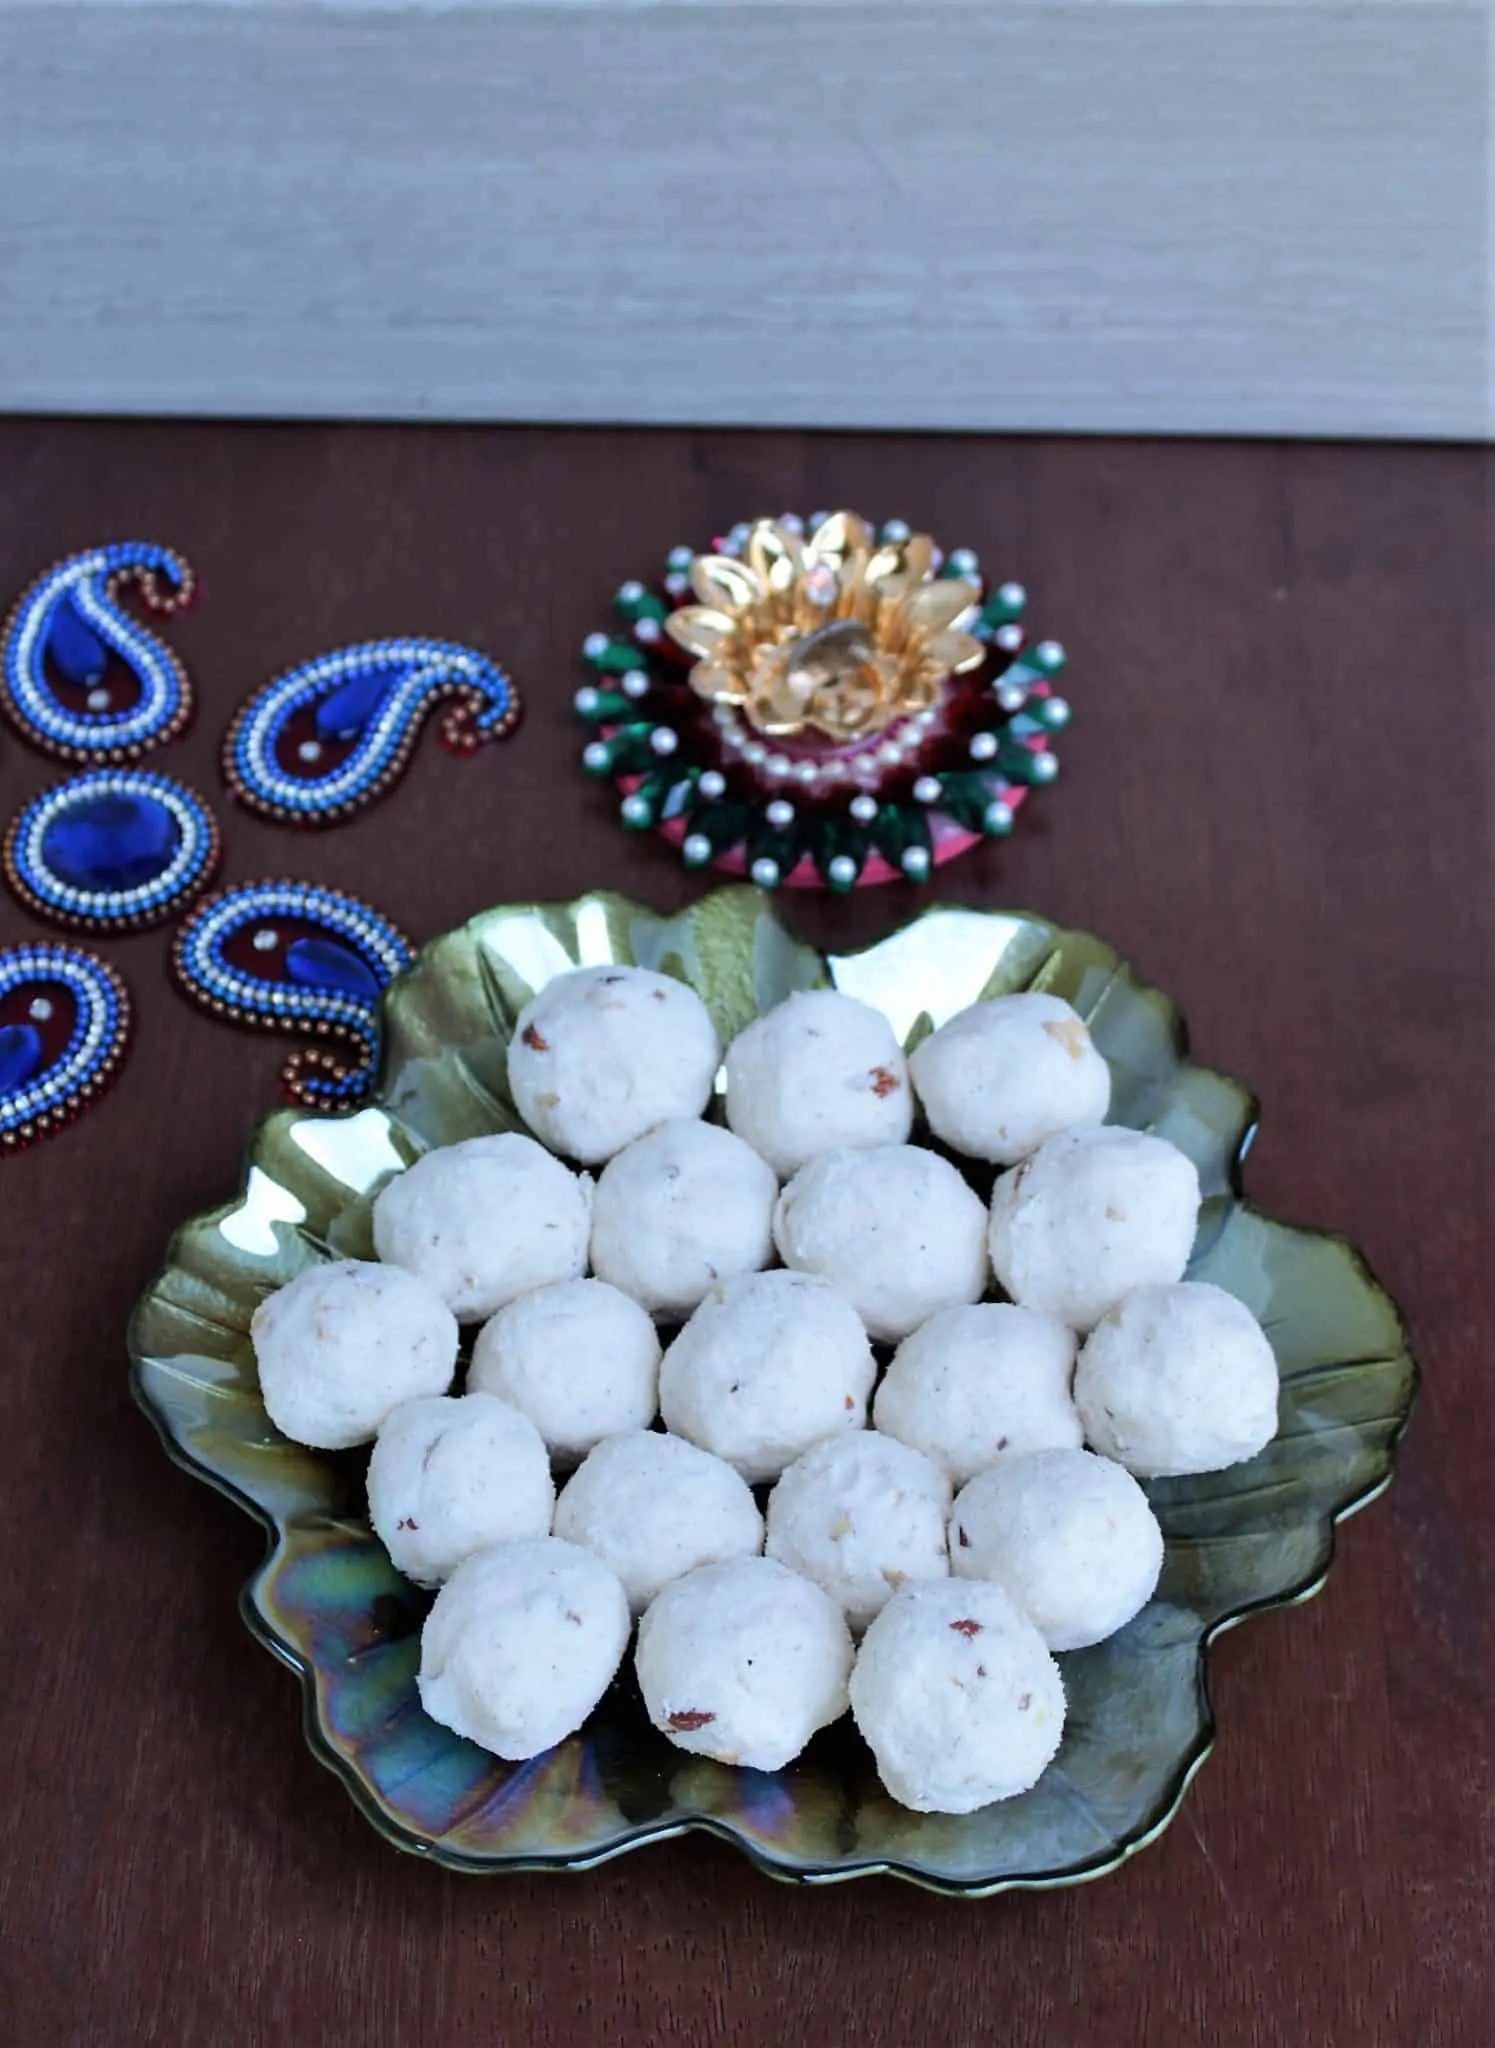 Rava urundai for Diwali.